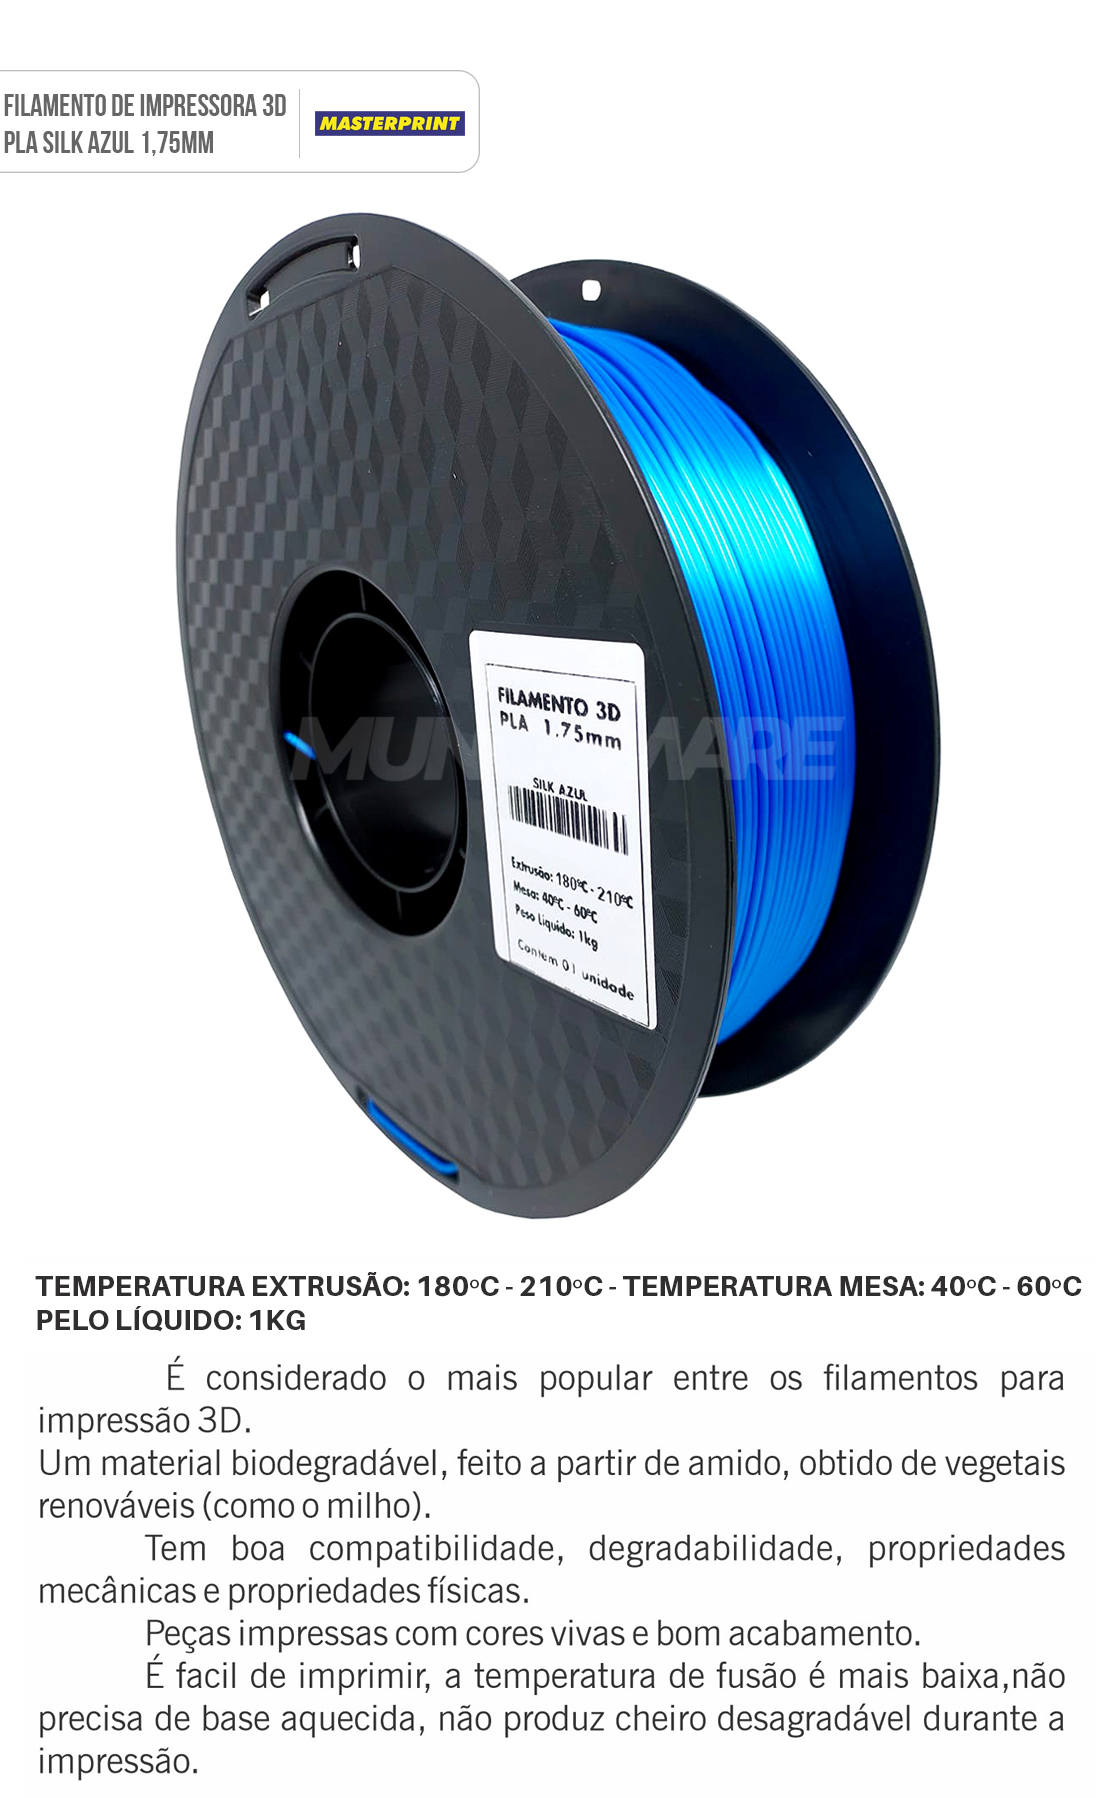 Filamento 3D PLA Silk Azul 1.75mm 1KG para Impressora 3D Cor Brilhante Textura Macia Masterprint